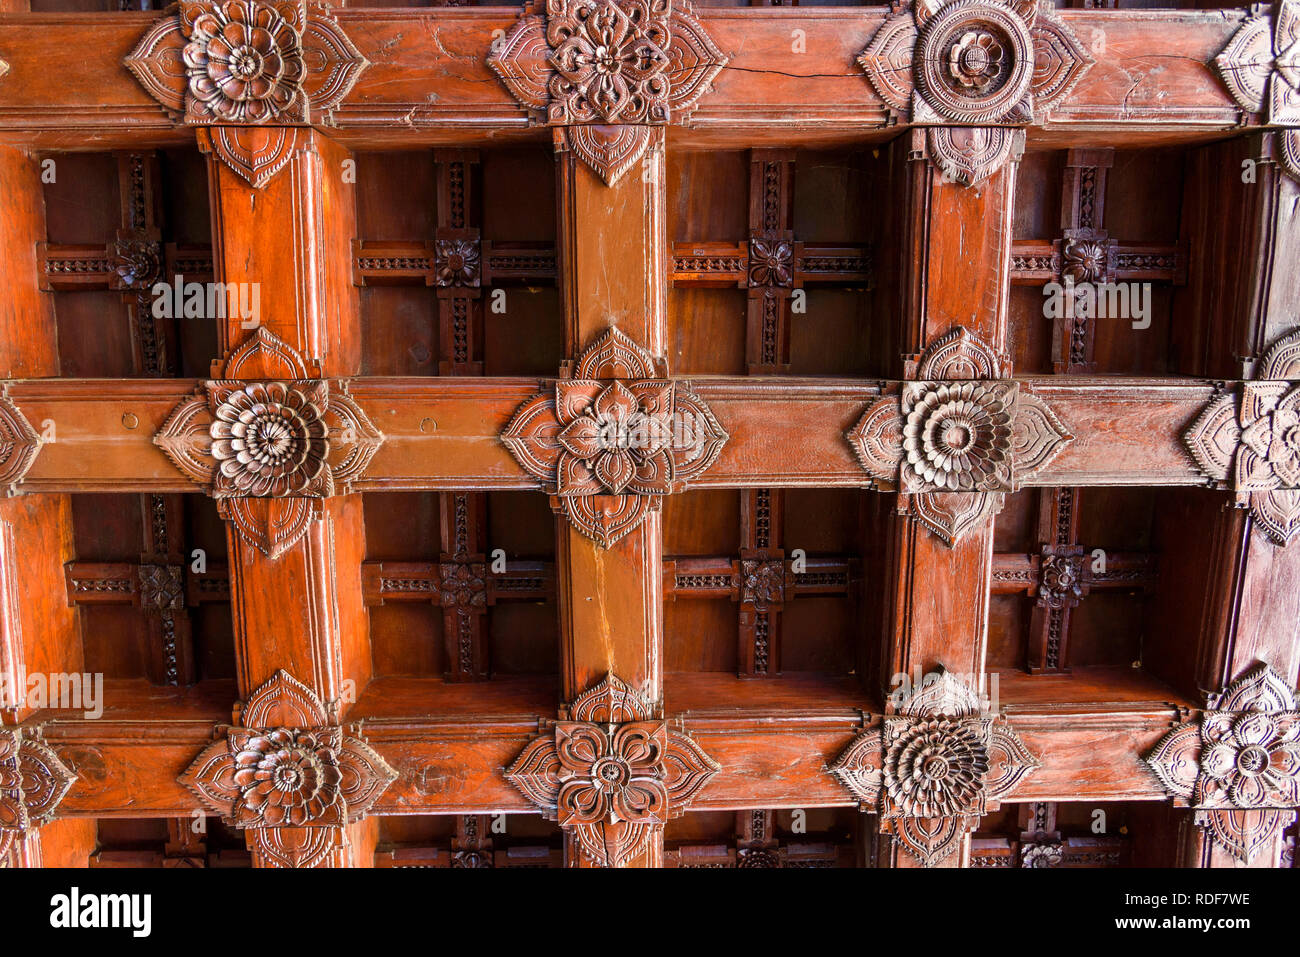 Ornate wooden ceiling, Padmanabhapuram Palace, typical Keralan architecture, Tamil Nadu, India Stock Photo